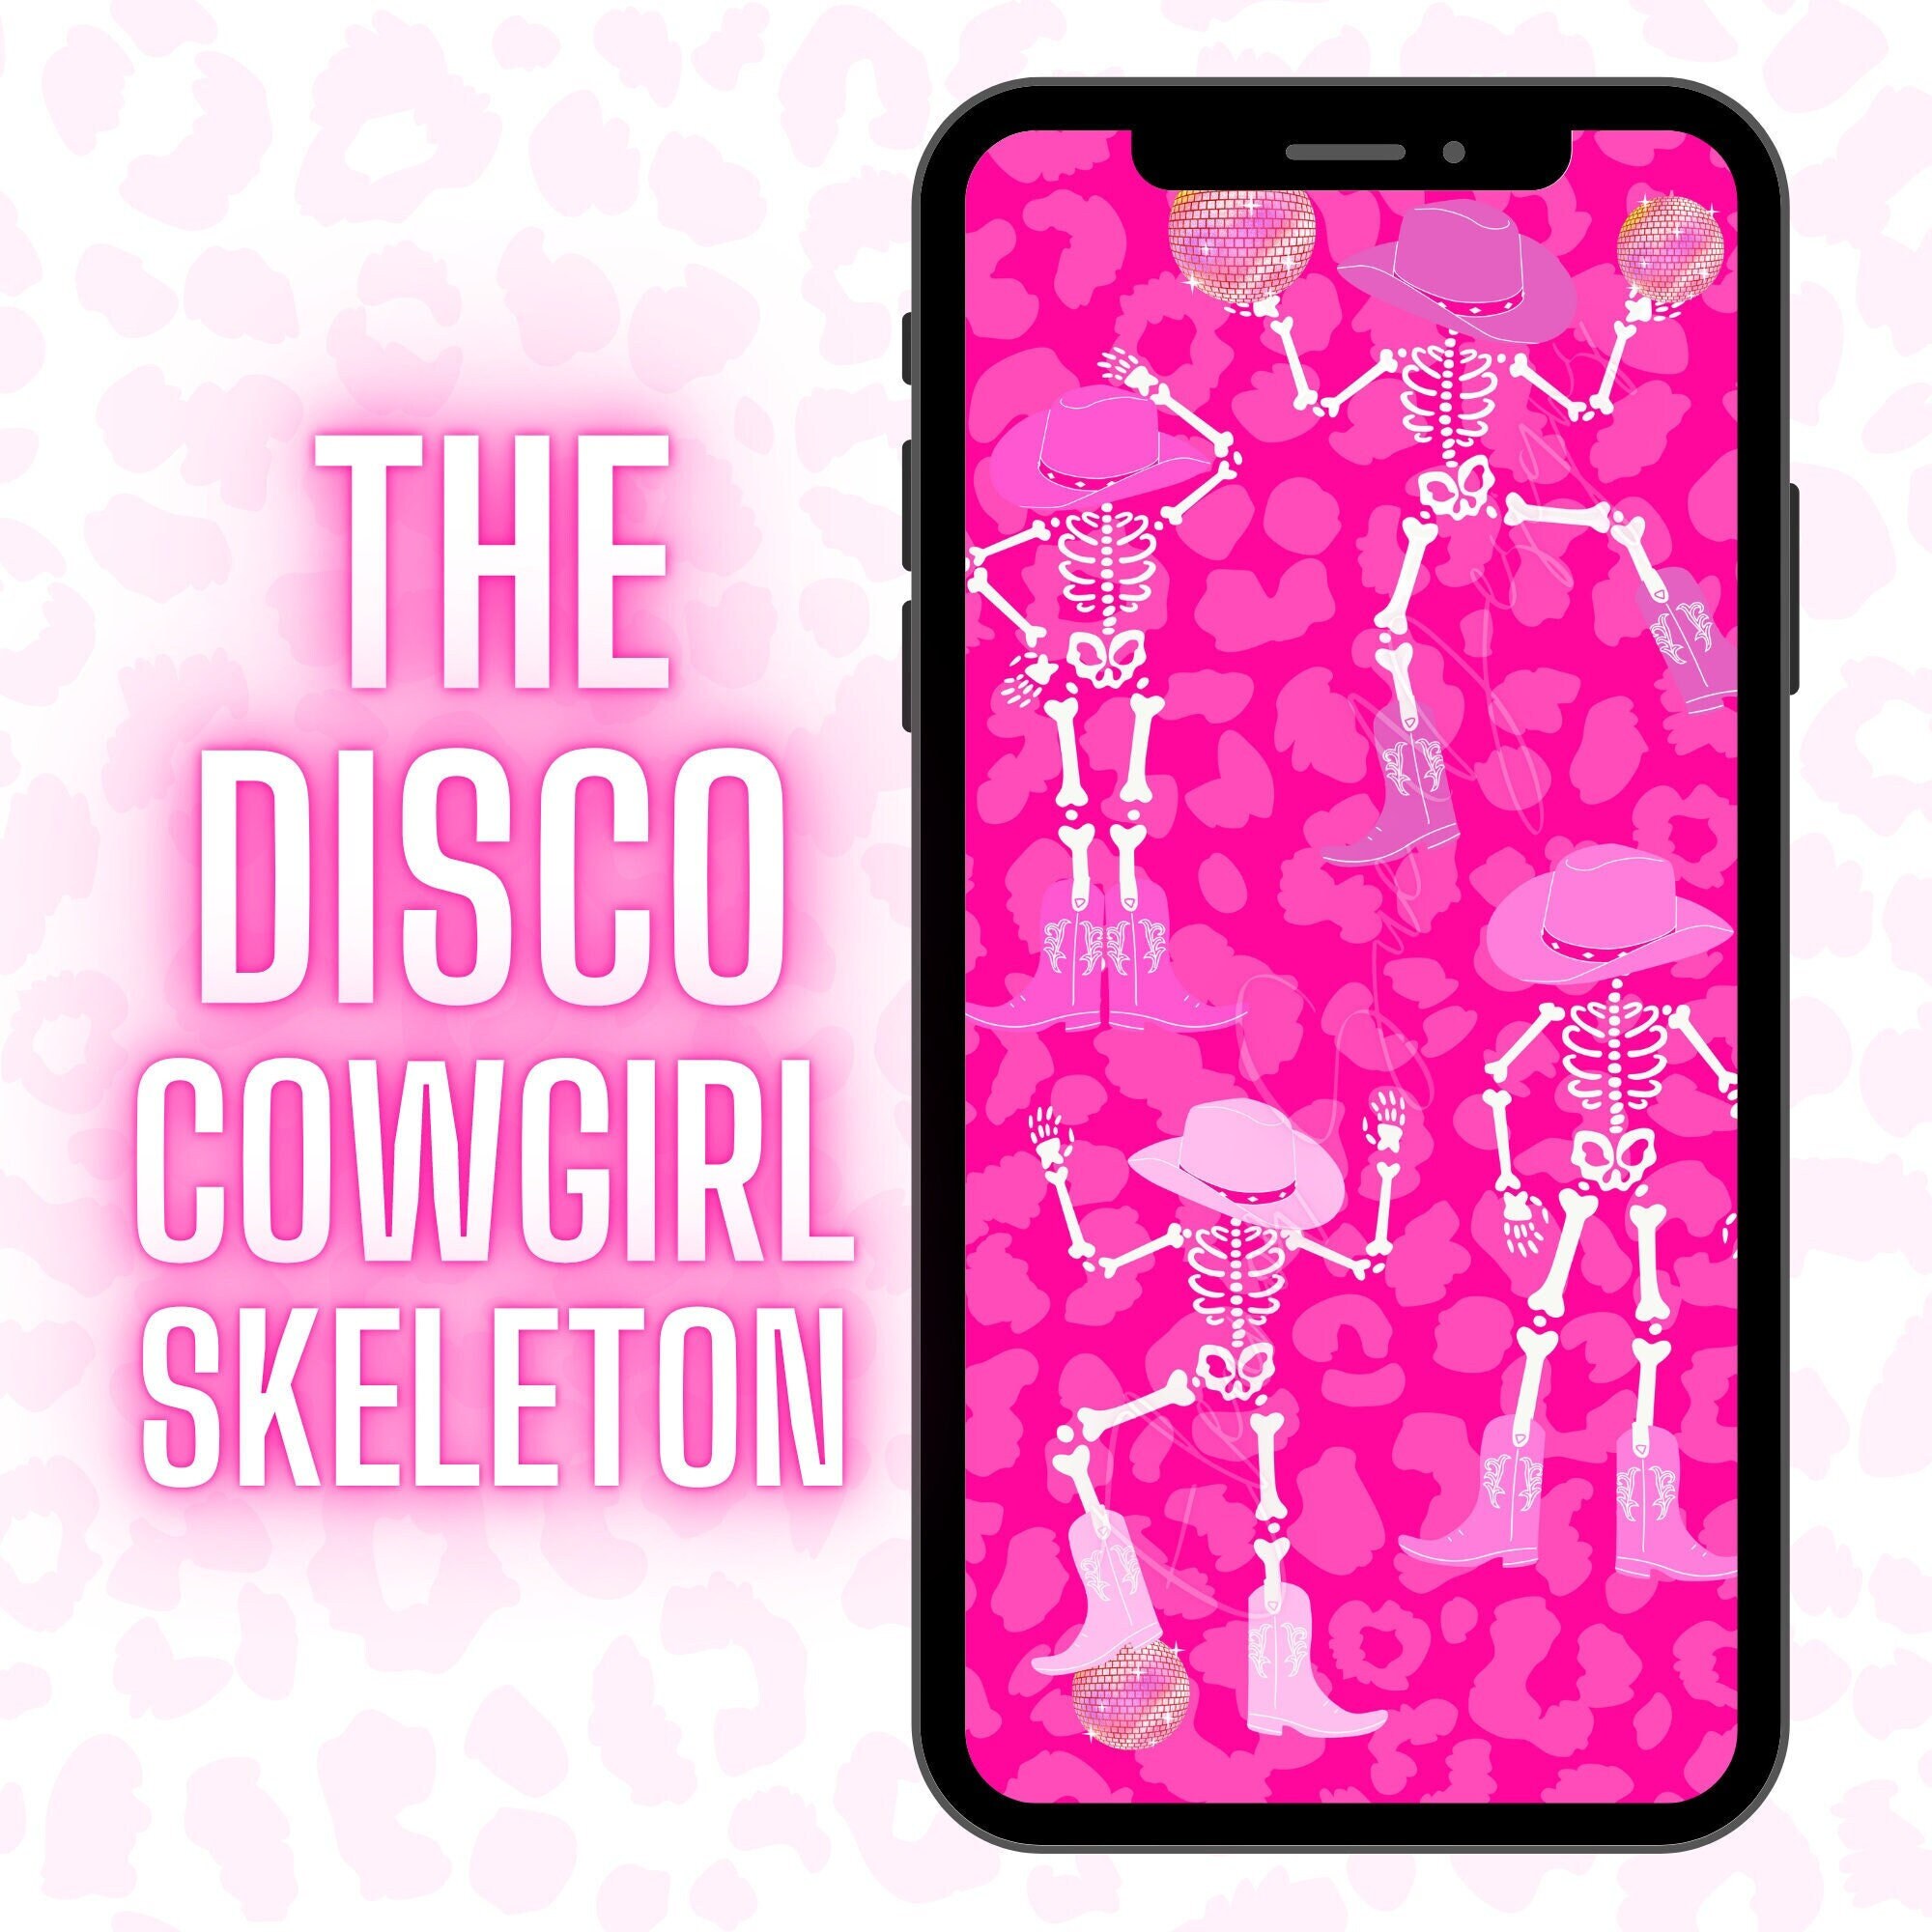 Disco cowgirl wallpaper